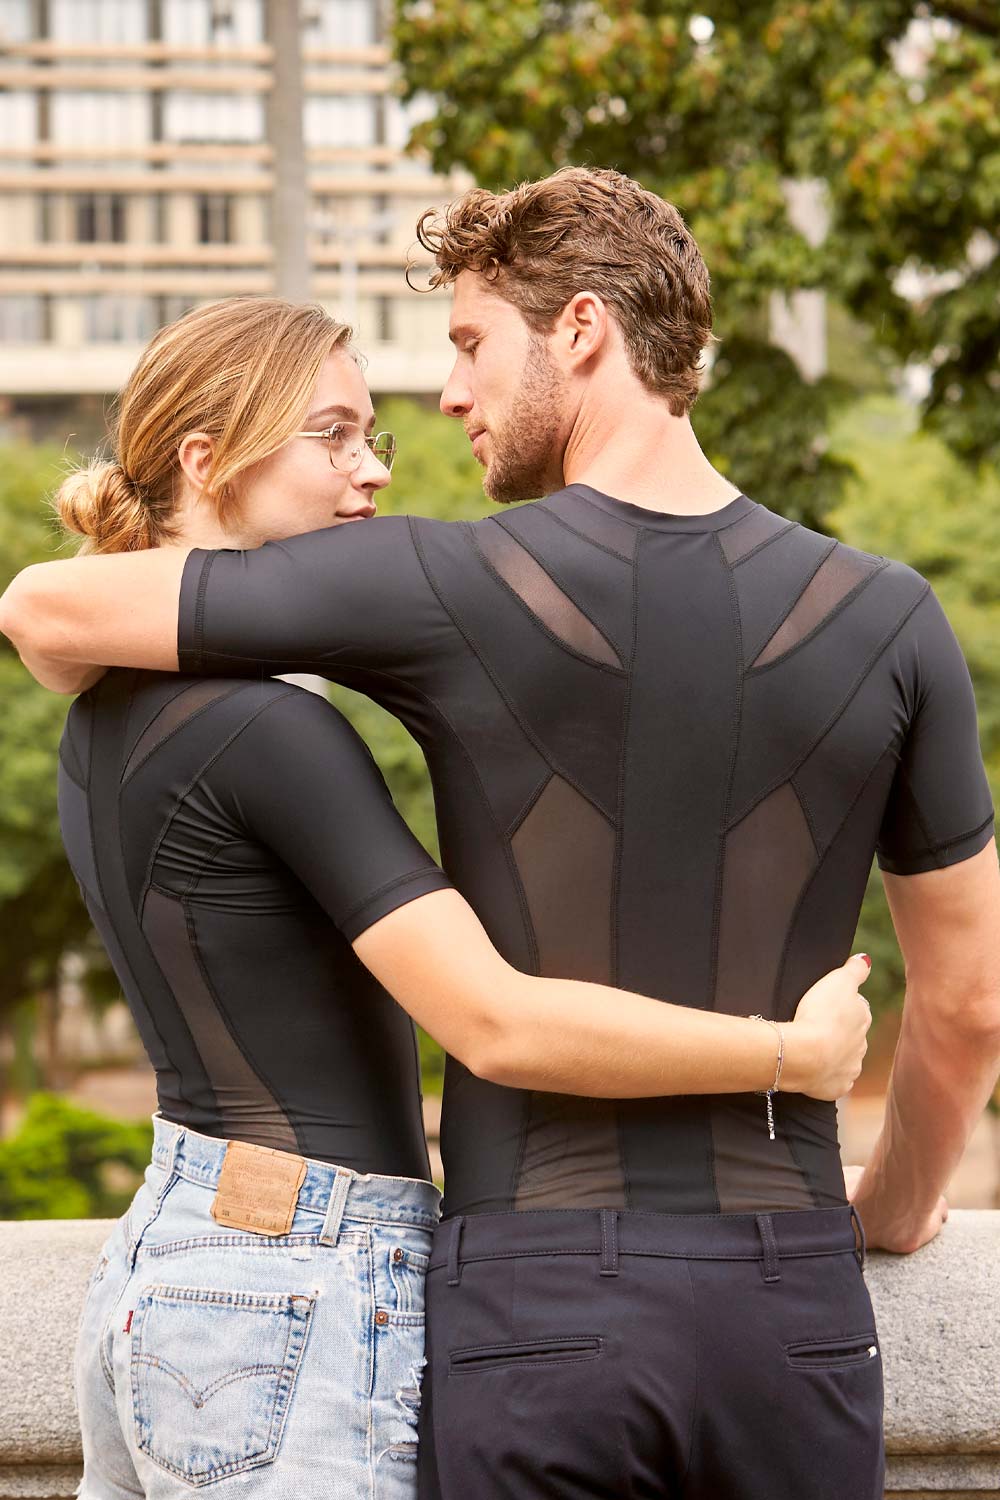 Women's Posture Shirt™ (Black)